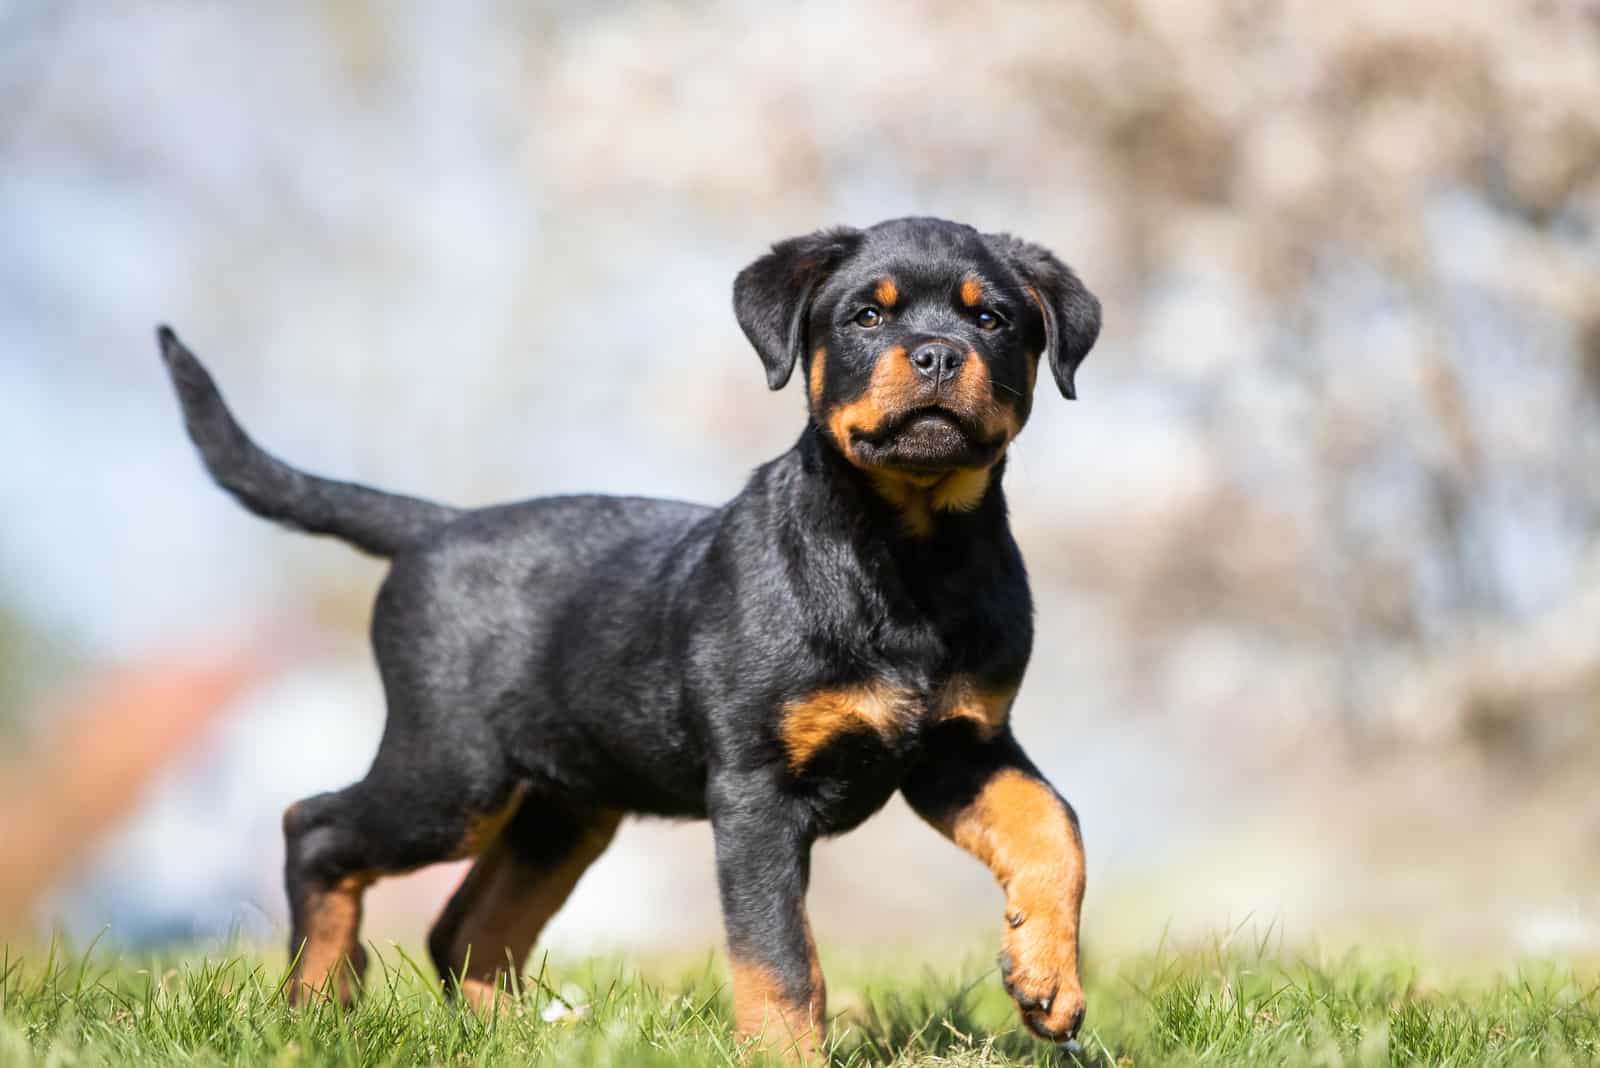 A Rottweiler puppy stands on the grass